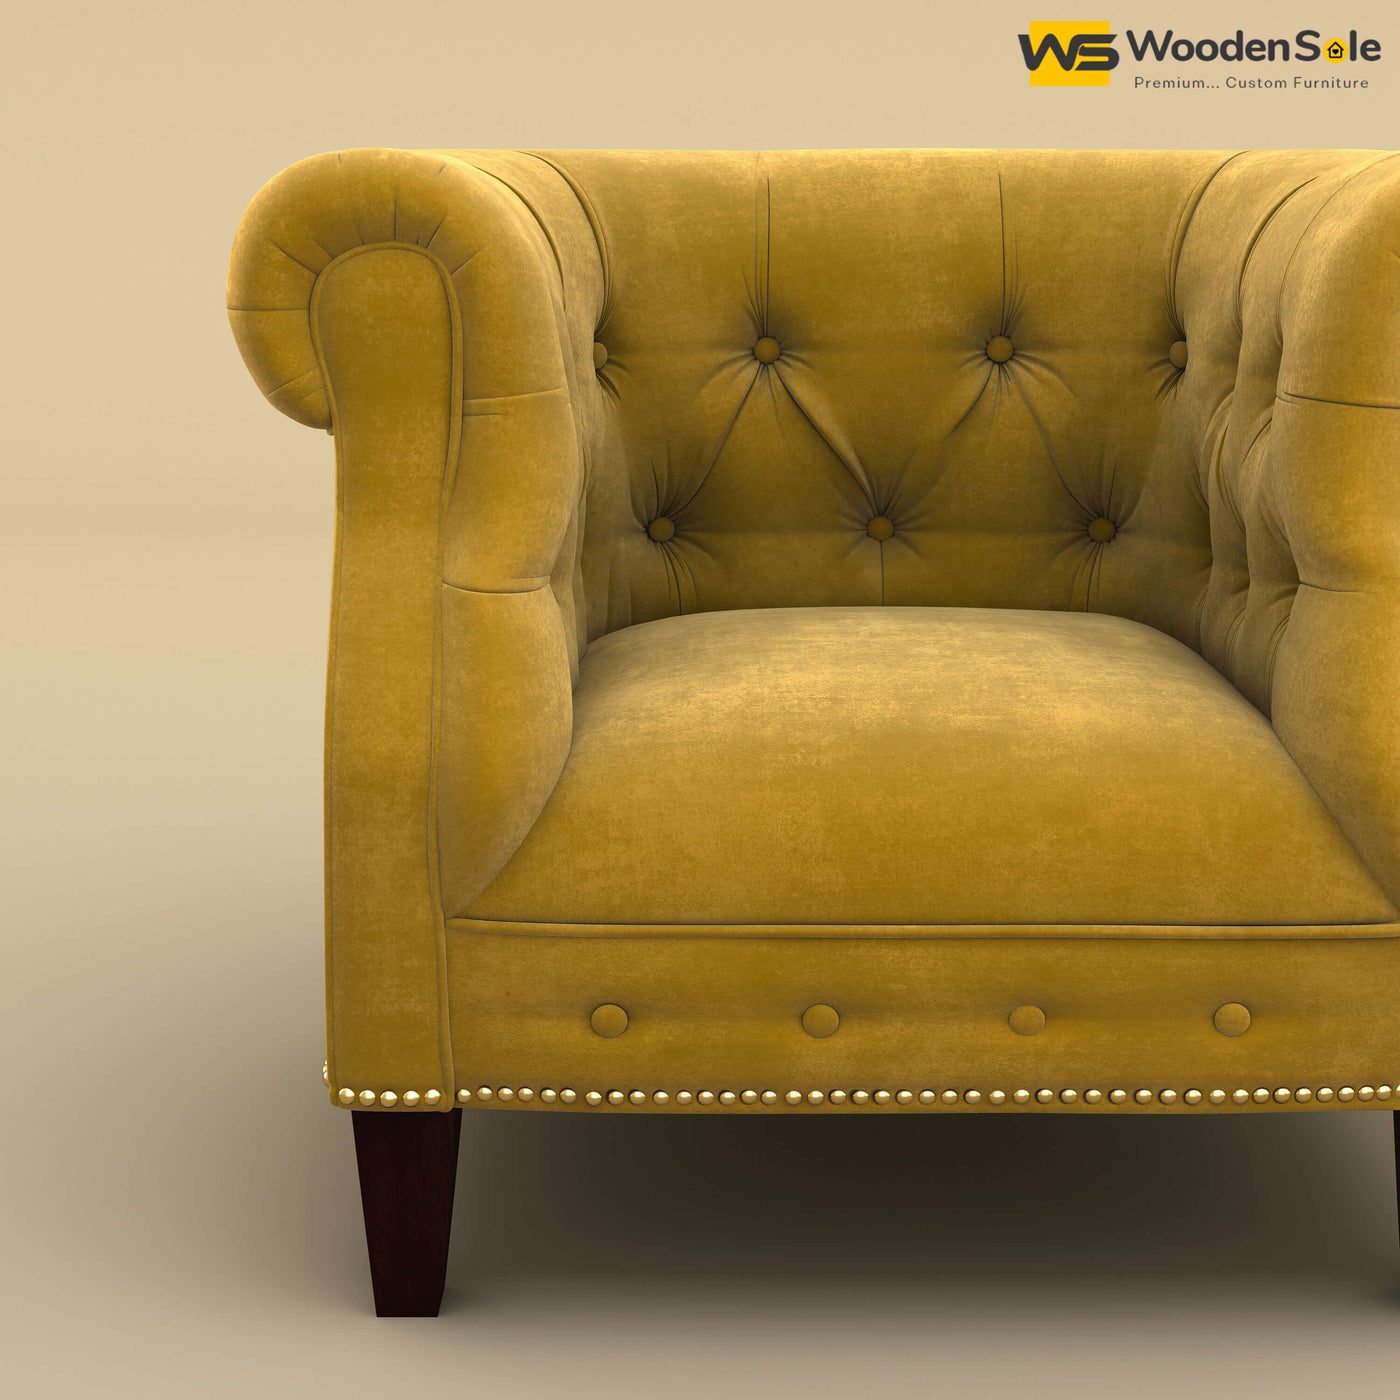 Olivia Wing Chair (Velvet, Mustard Yellow)